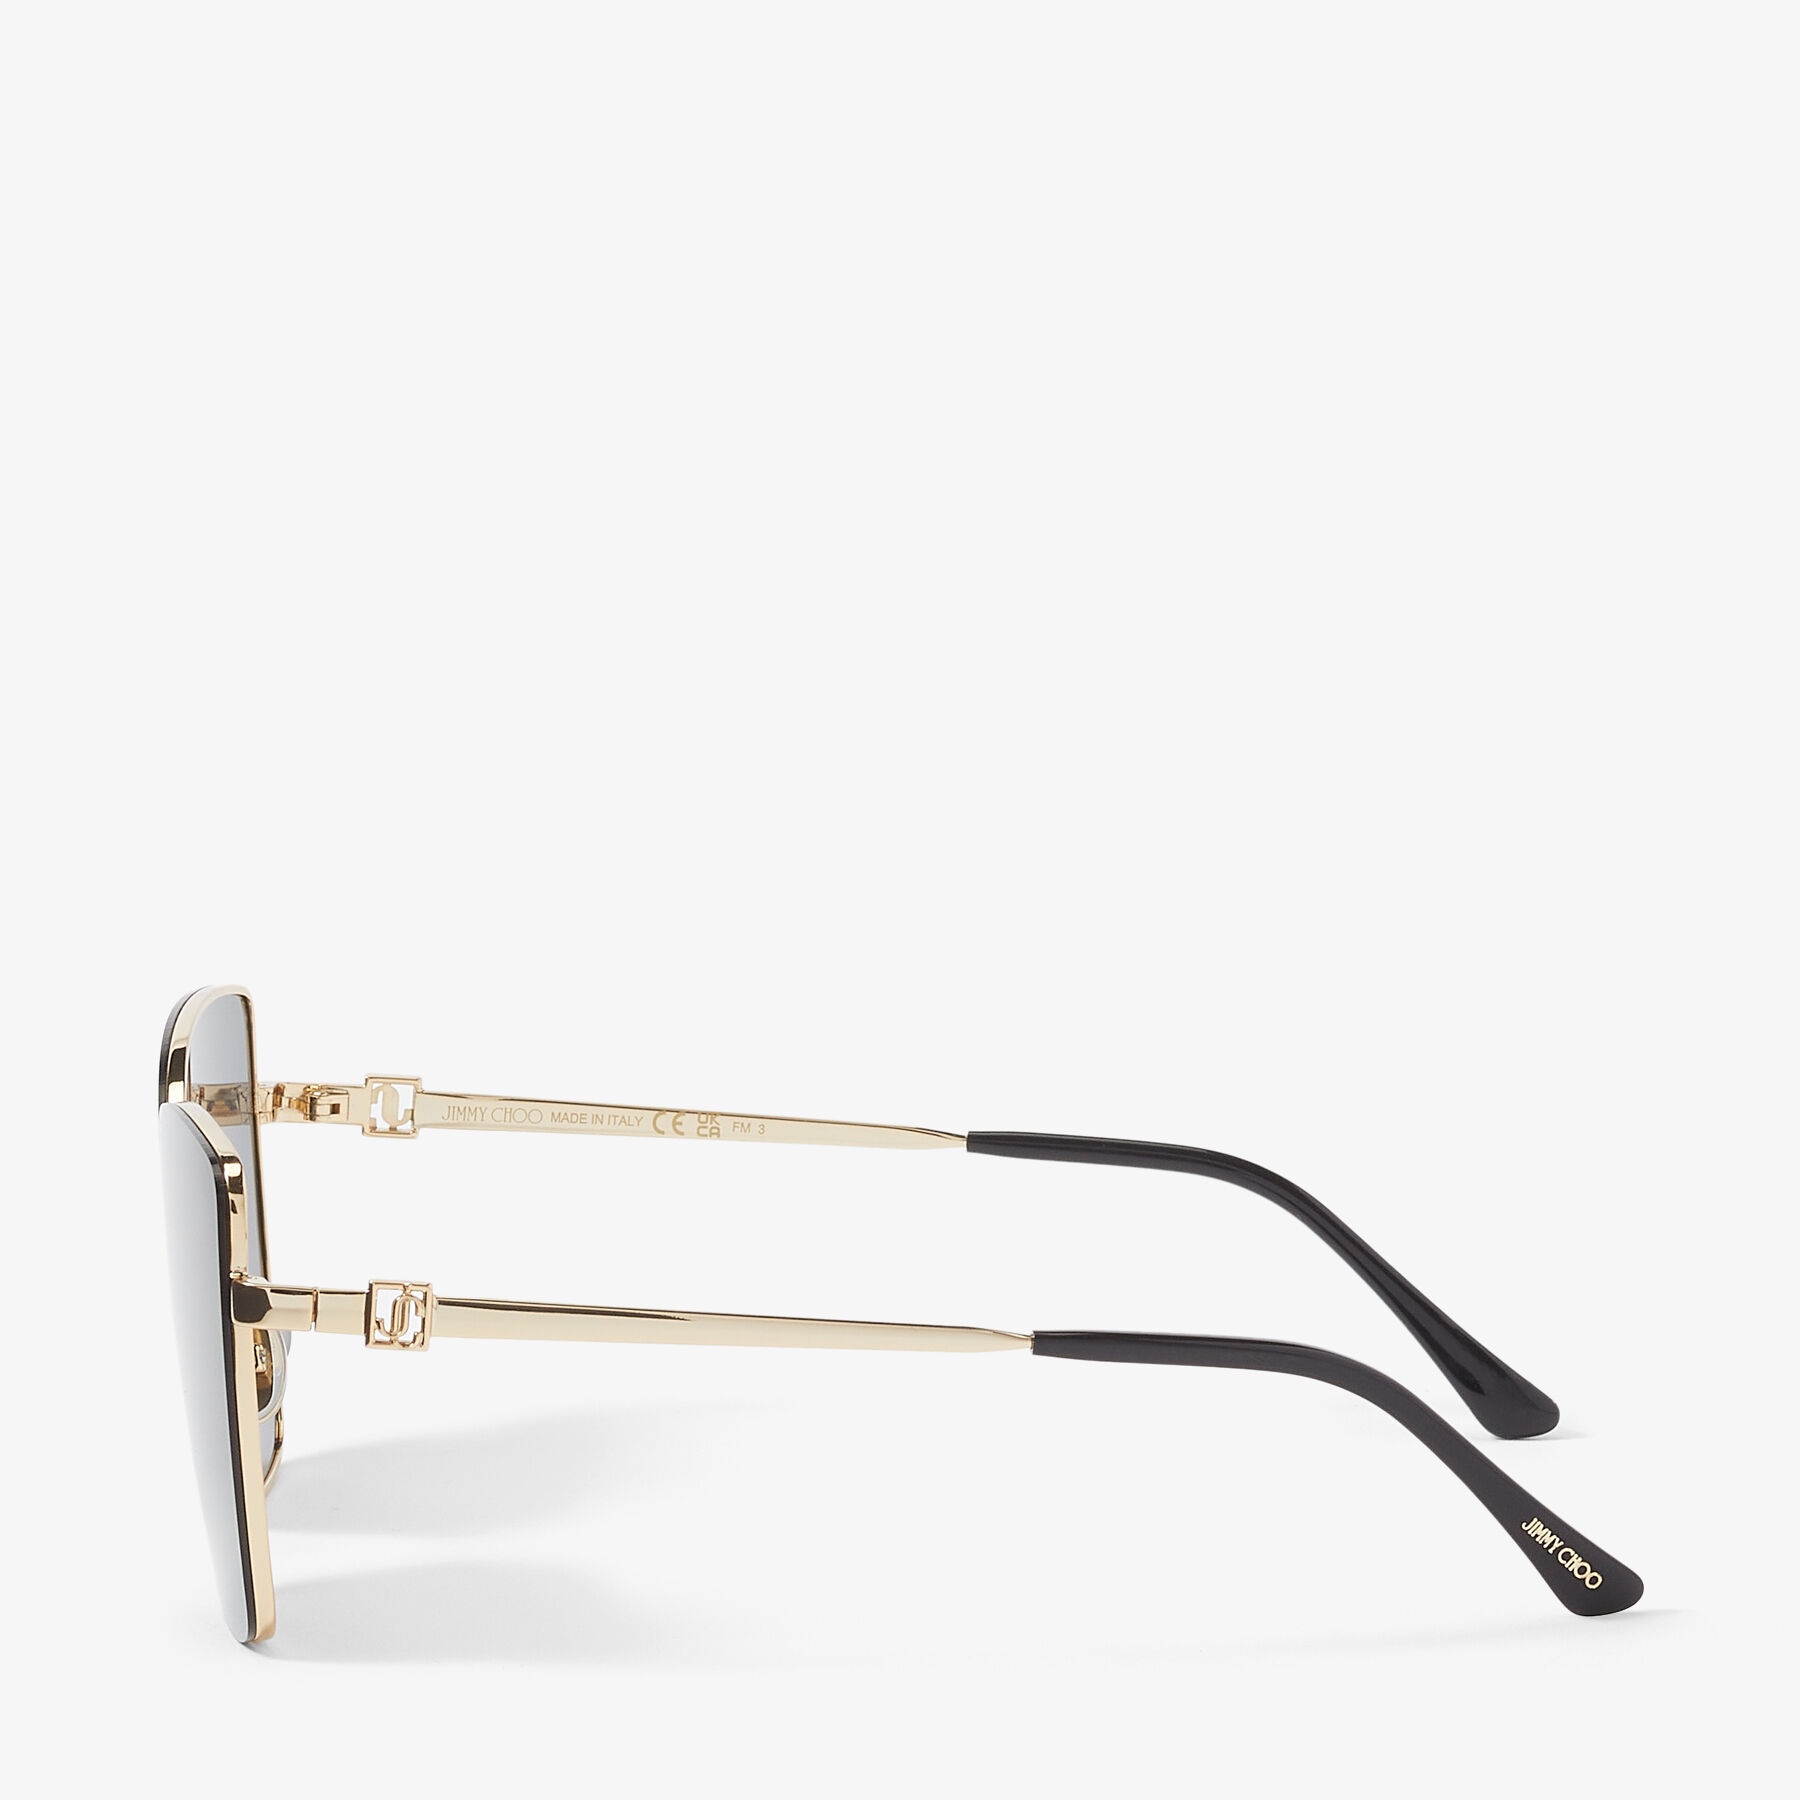 Vella/S 59
Rose Gold and Black Square Frame Sunglasses with JC Emblem - 2